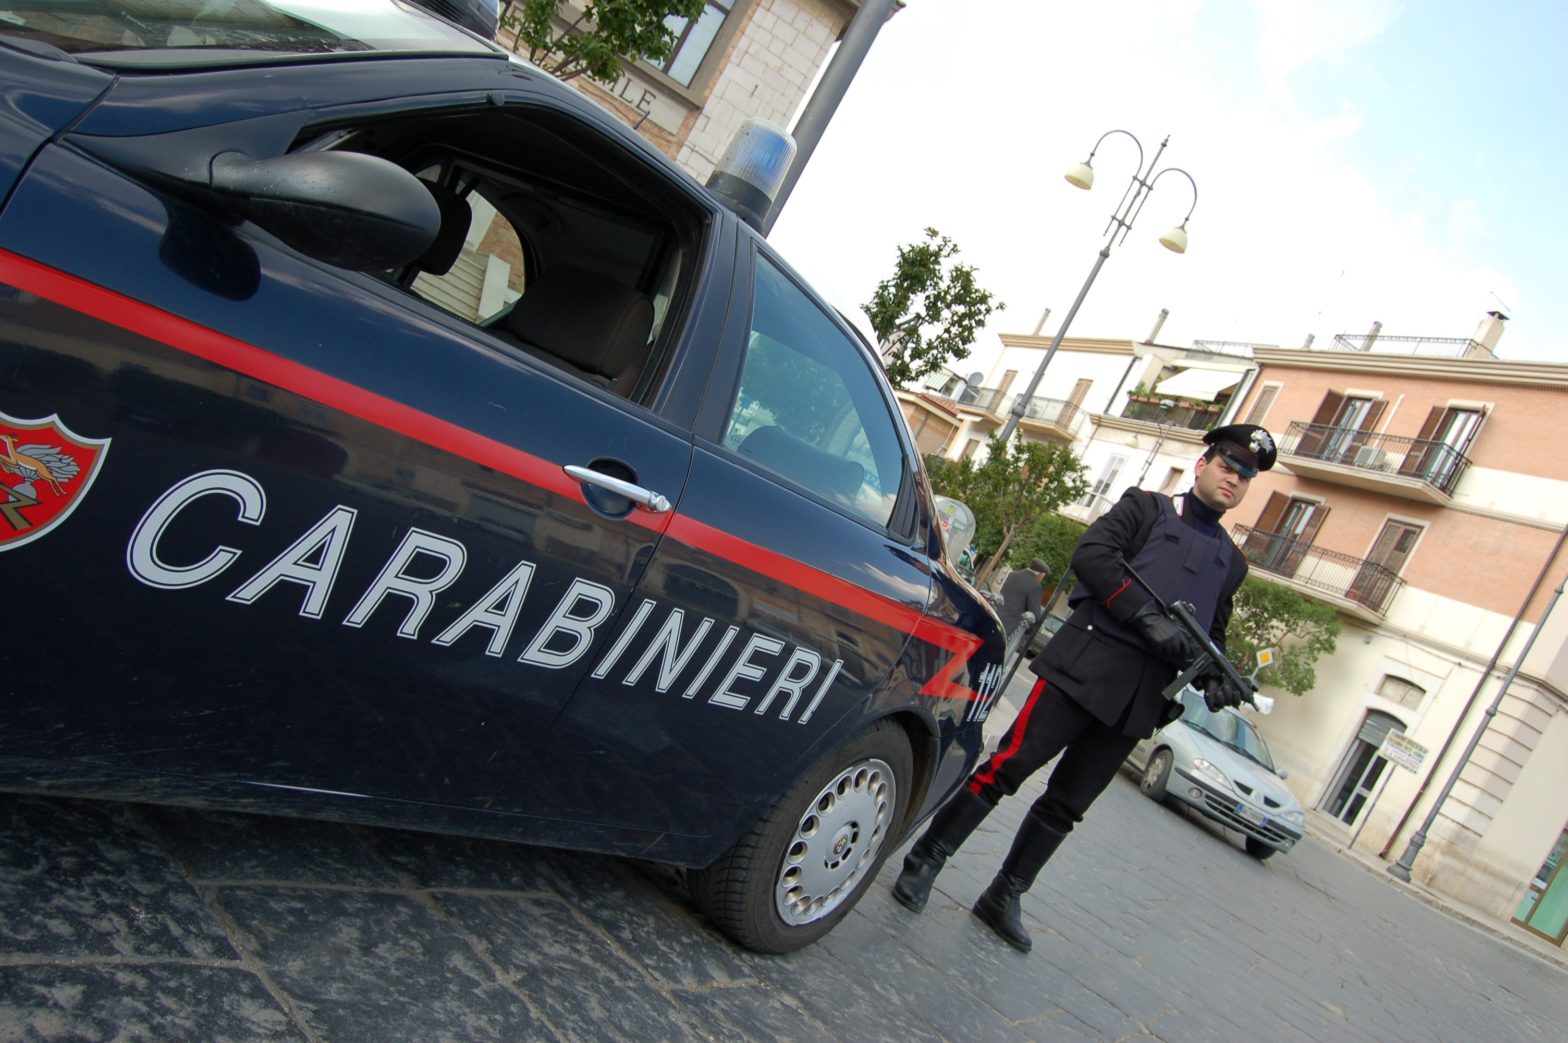 carabinier.jpg